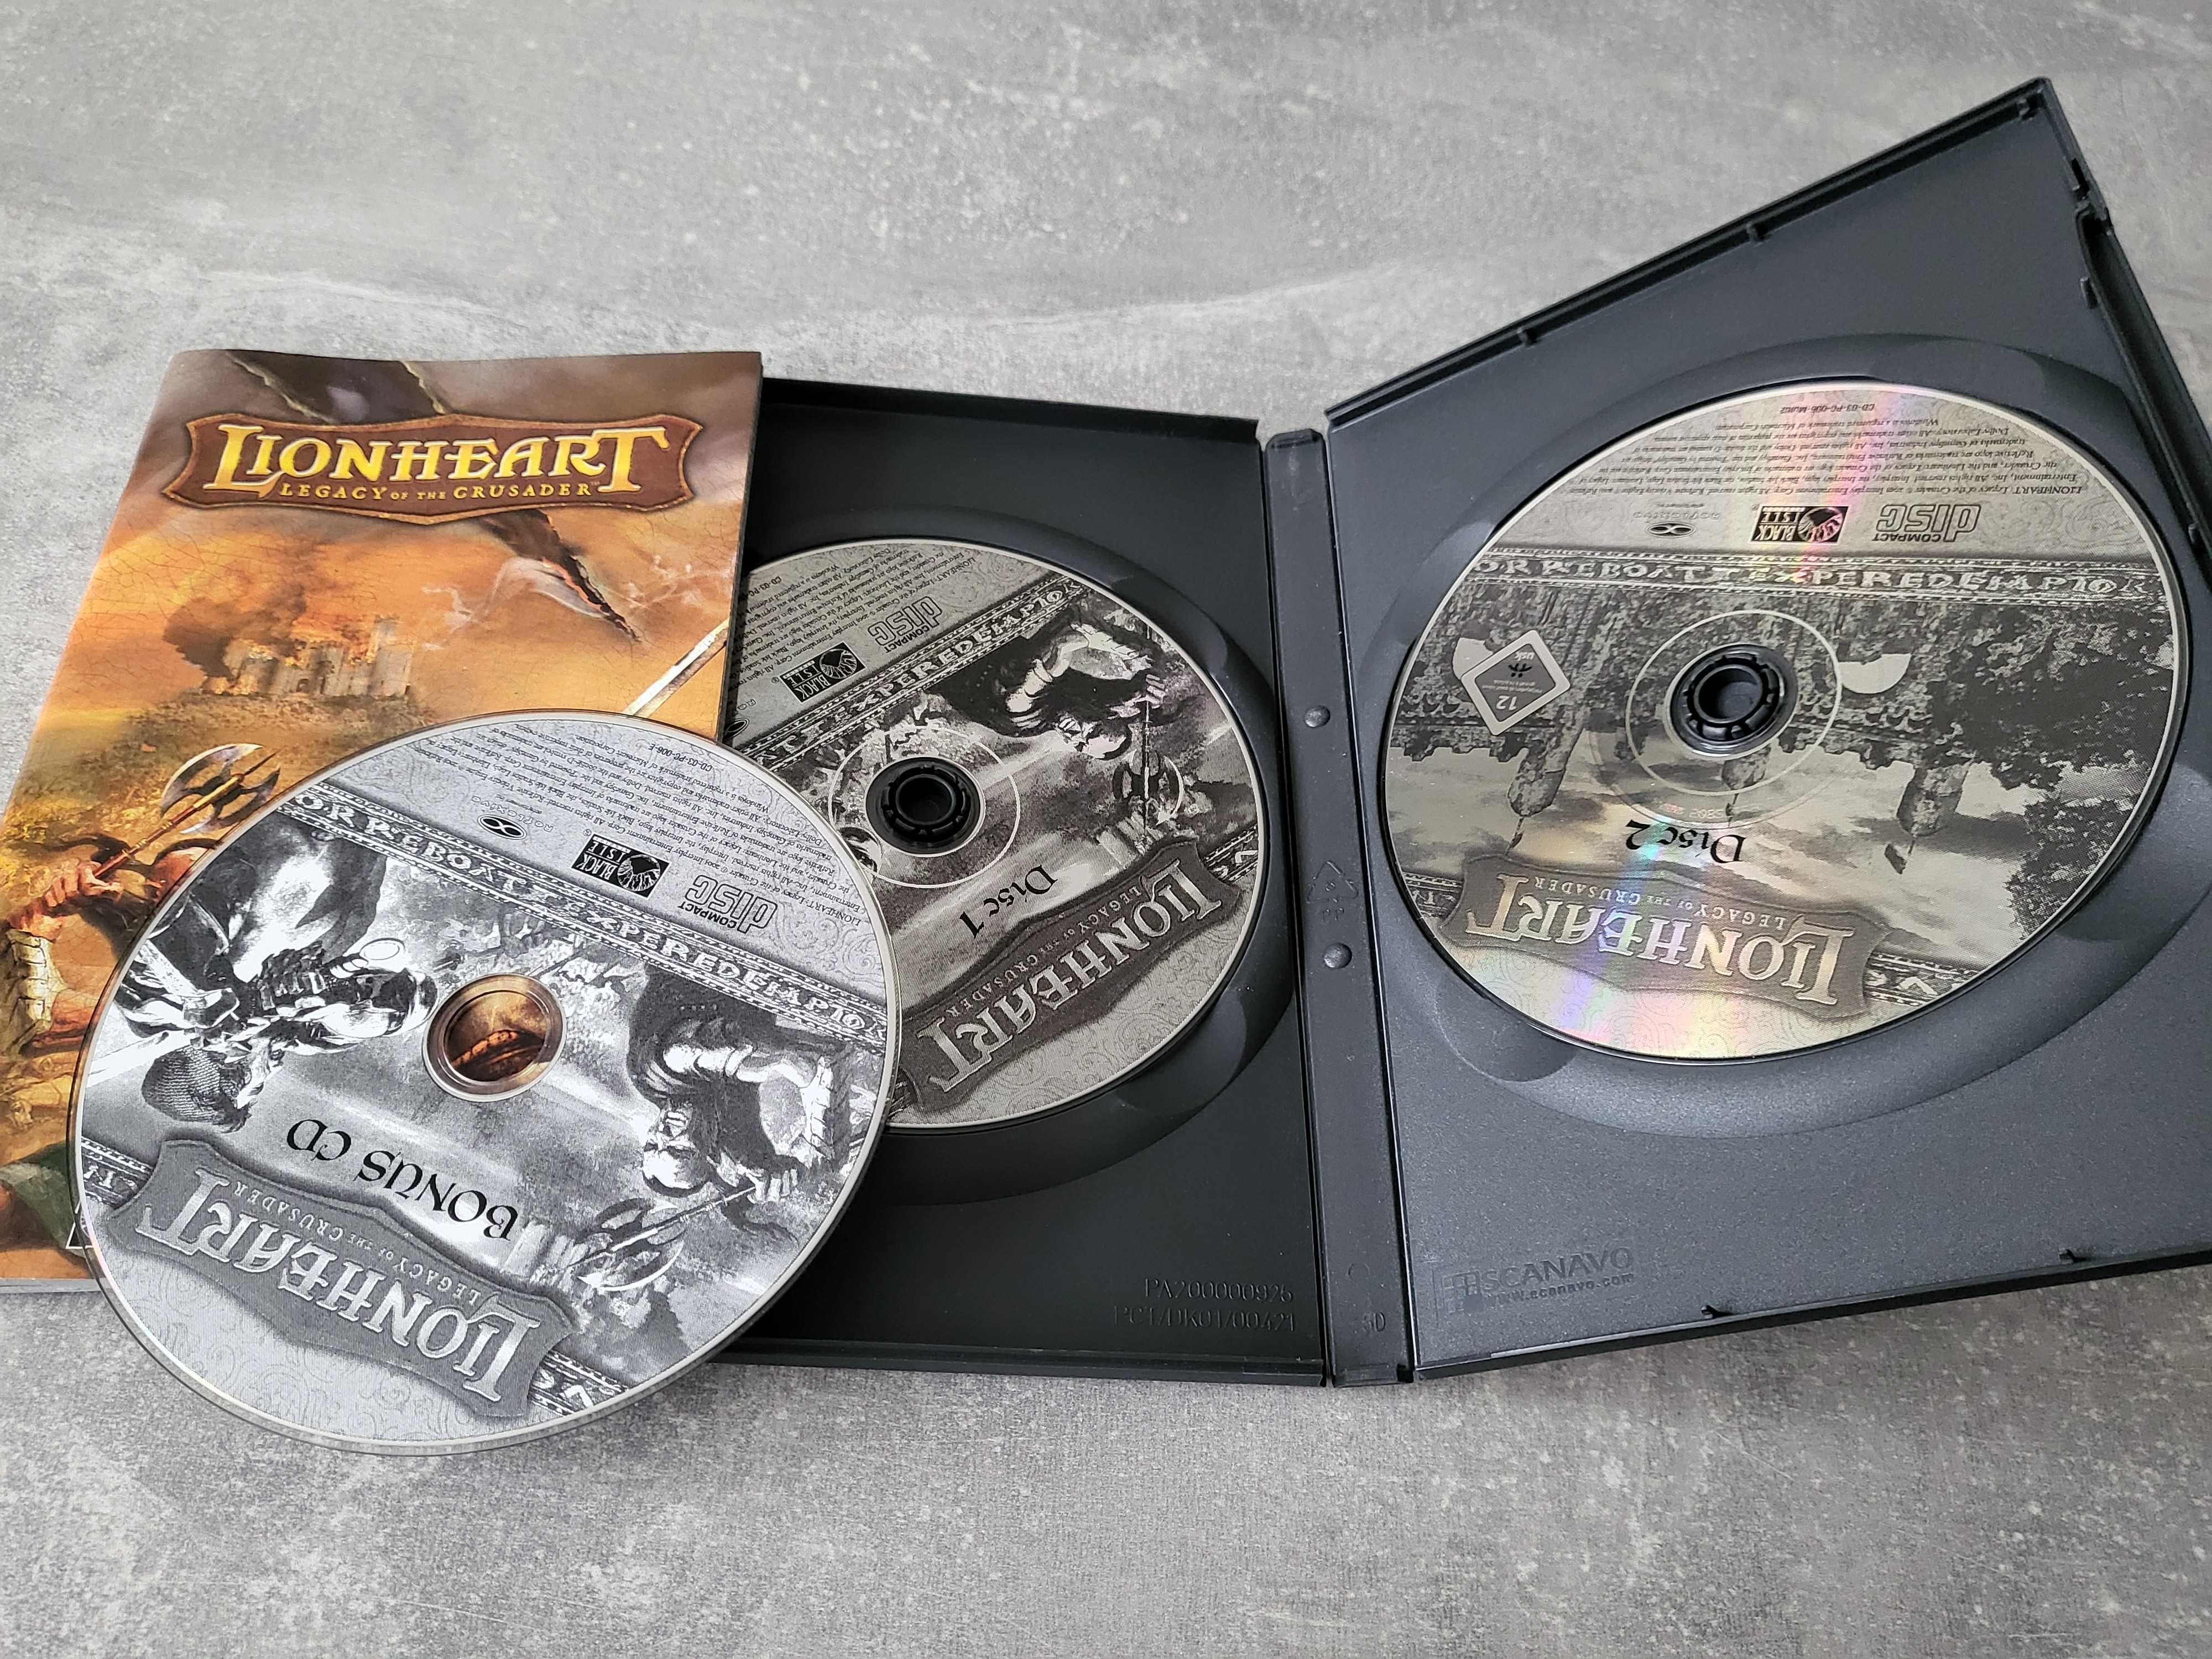 Lionheart Legacy of the crusader bonusowe cd